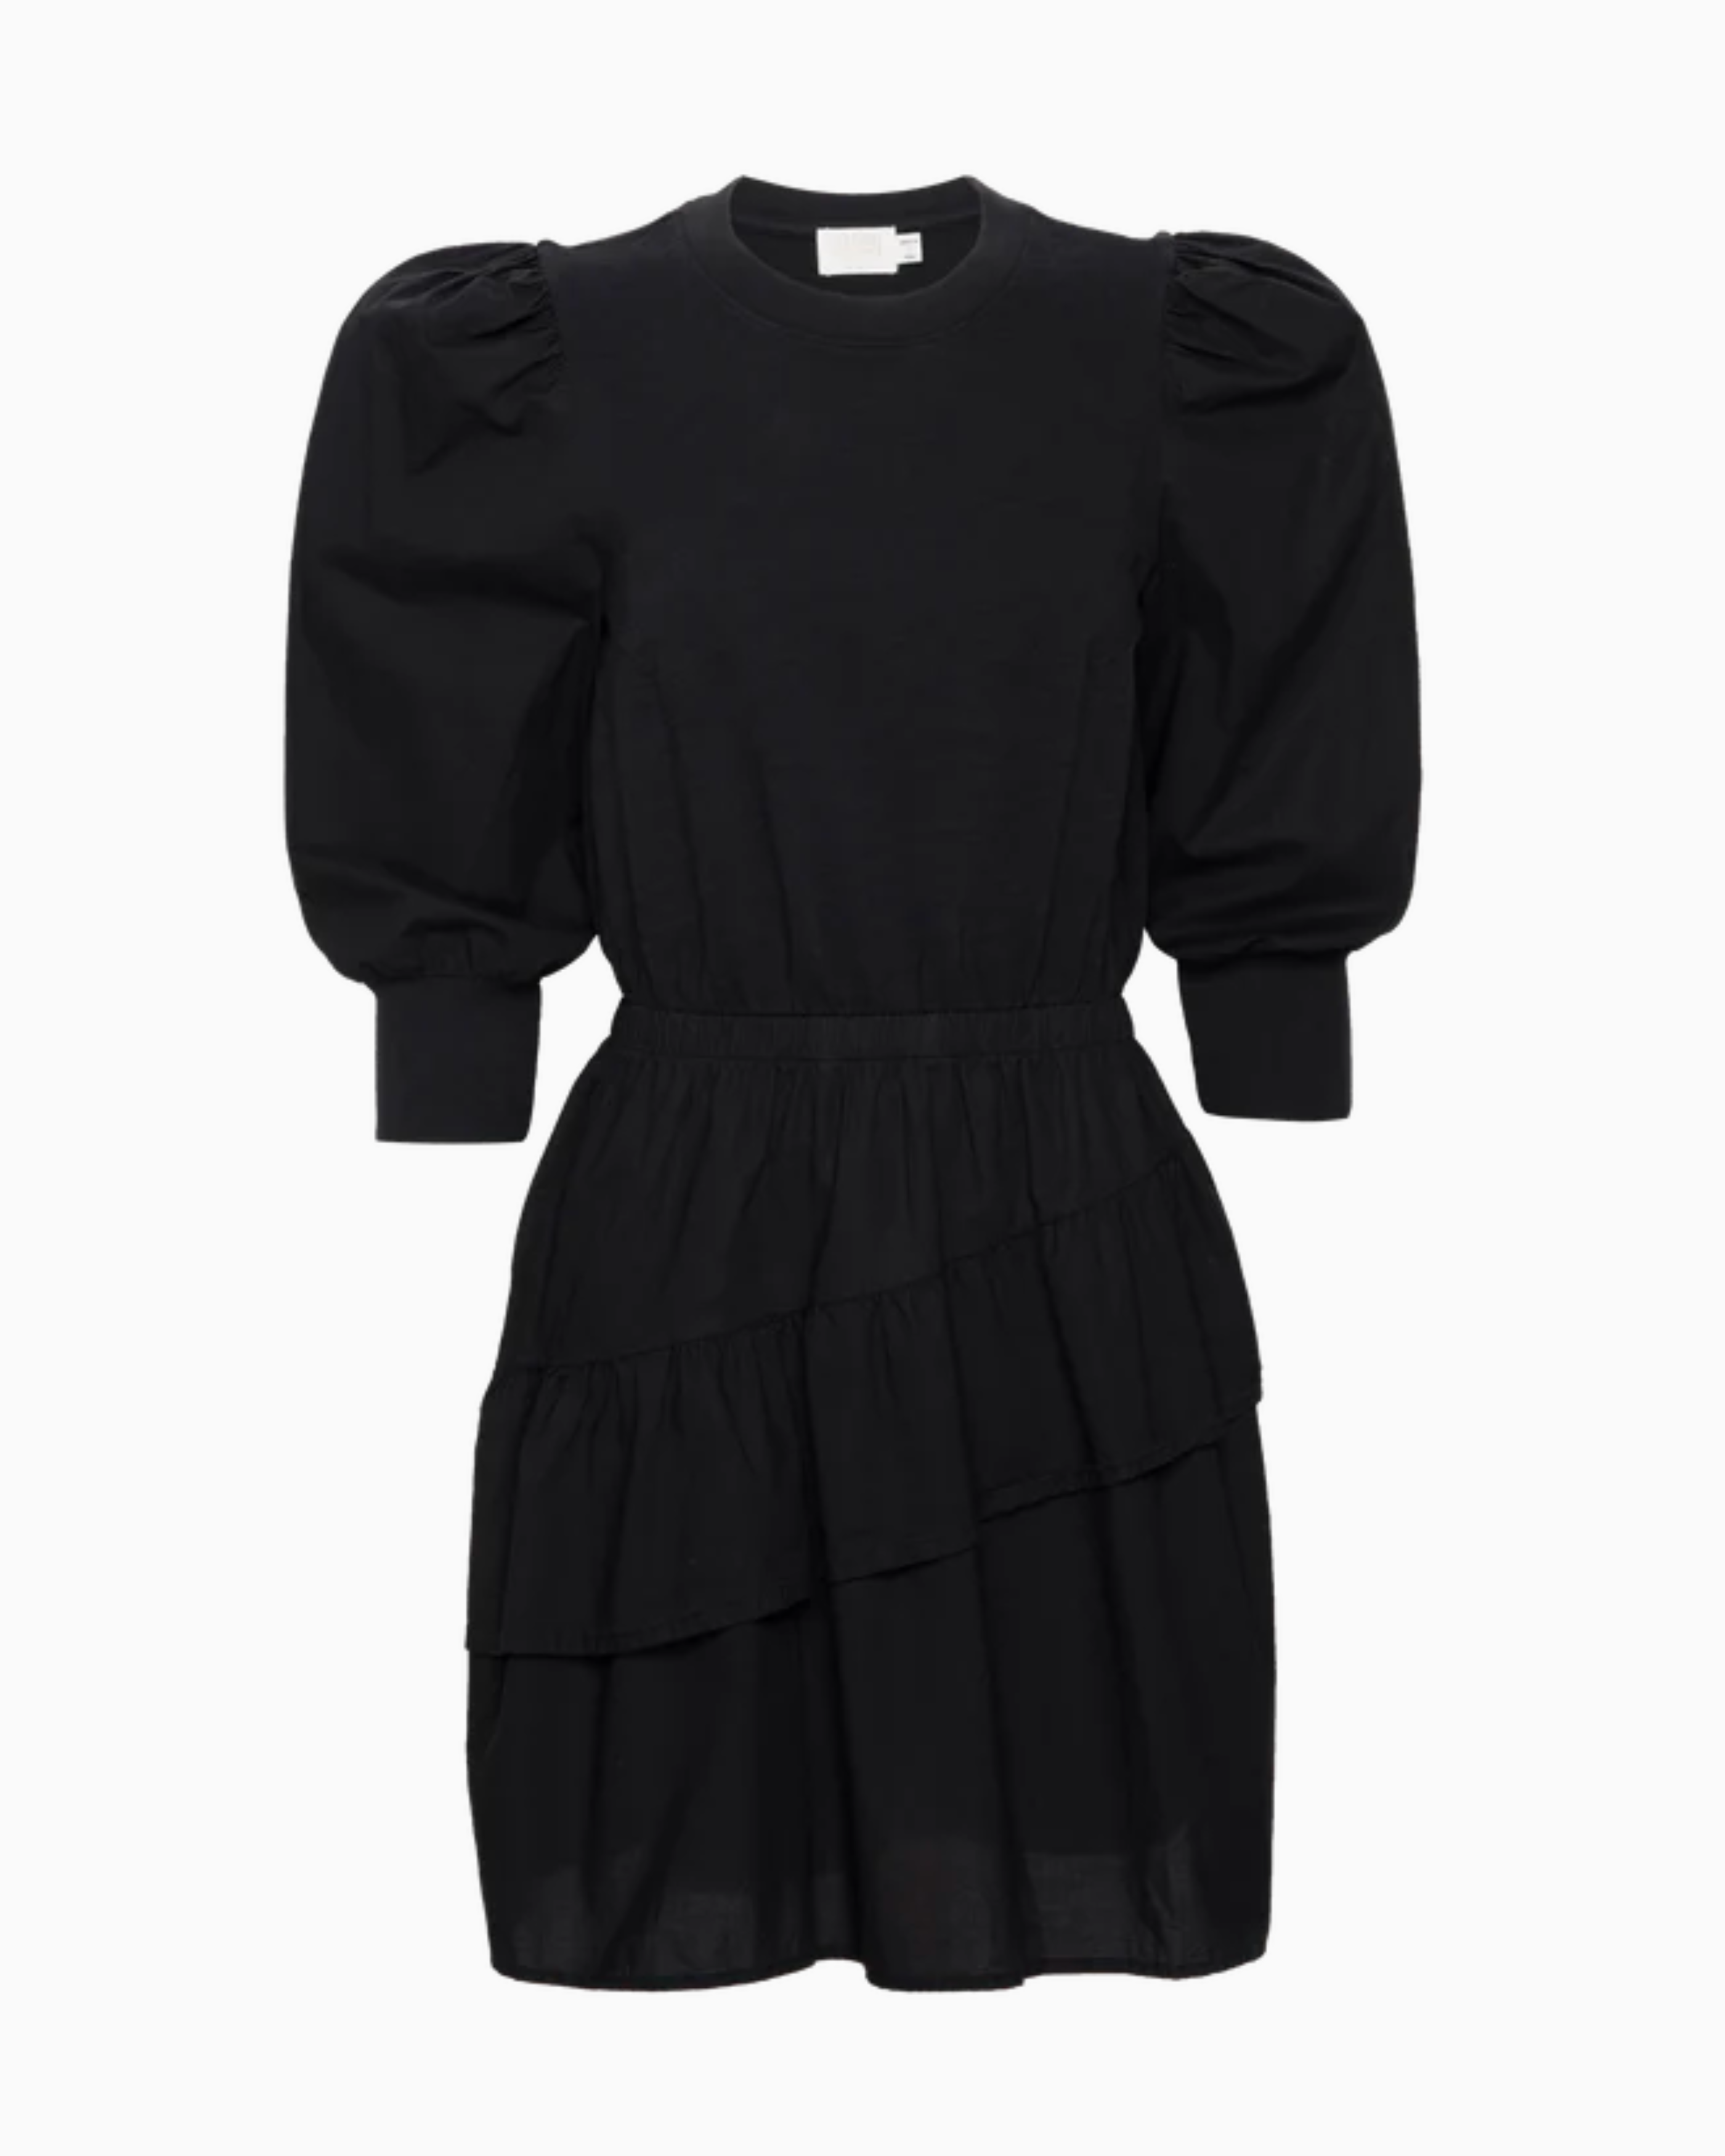 Nation Tenley Ruffed Combo Mini Dress in Jet Black